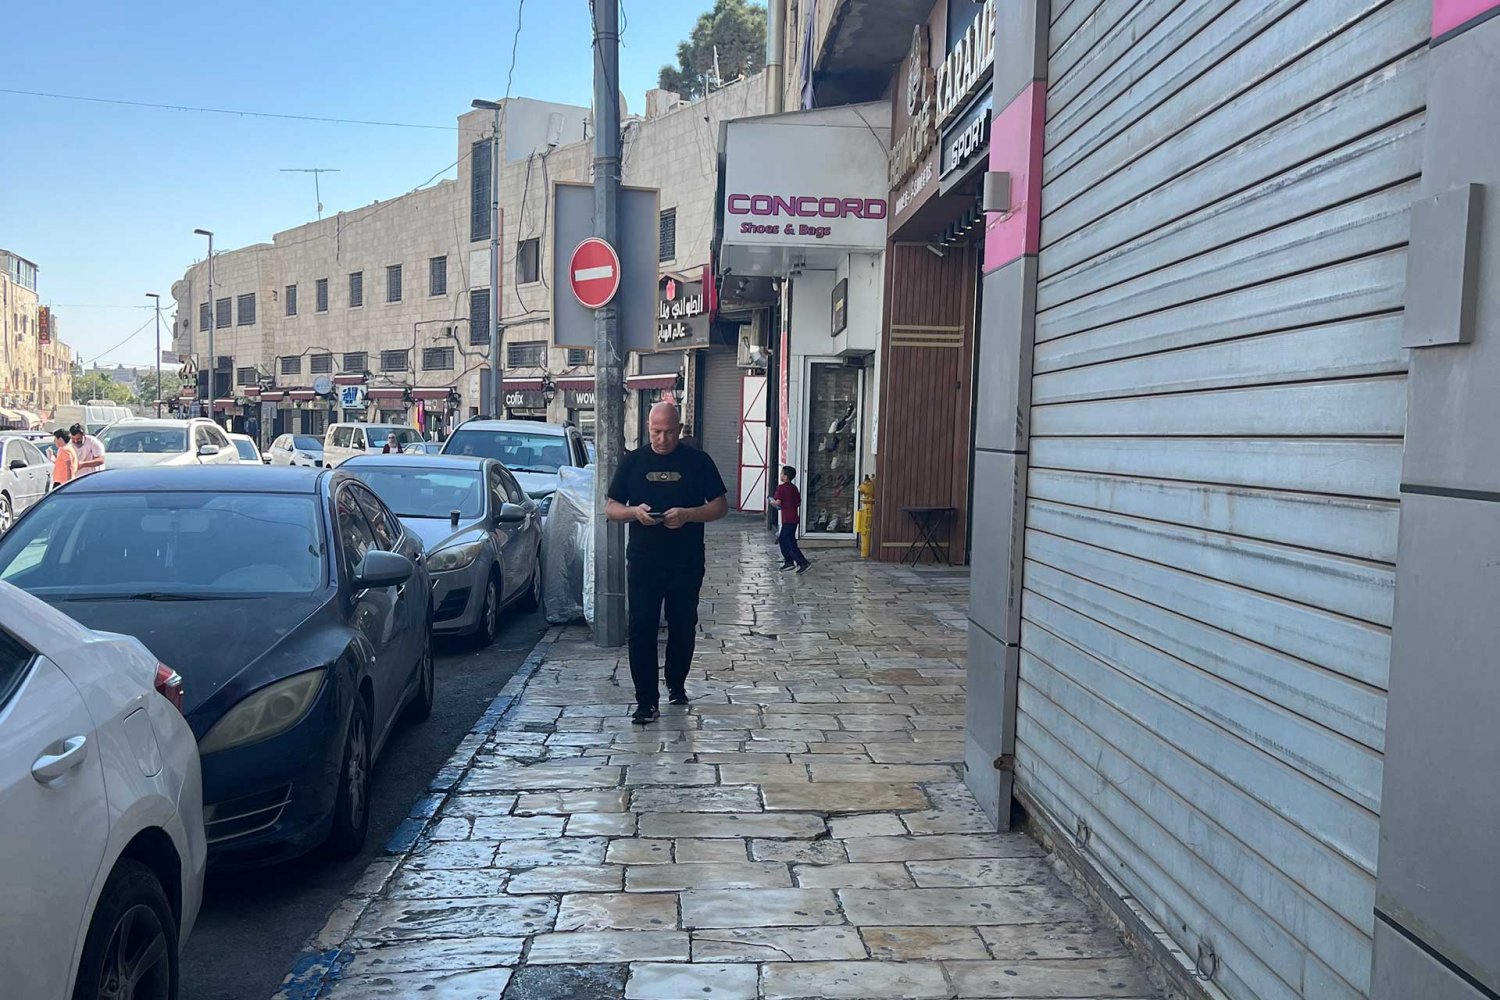 Salah al-Din Street, a once-thriving commercial artery in East Jerusalem